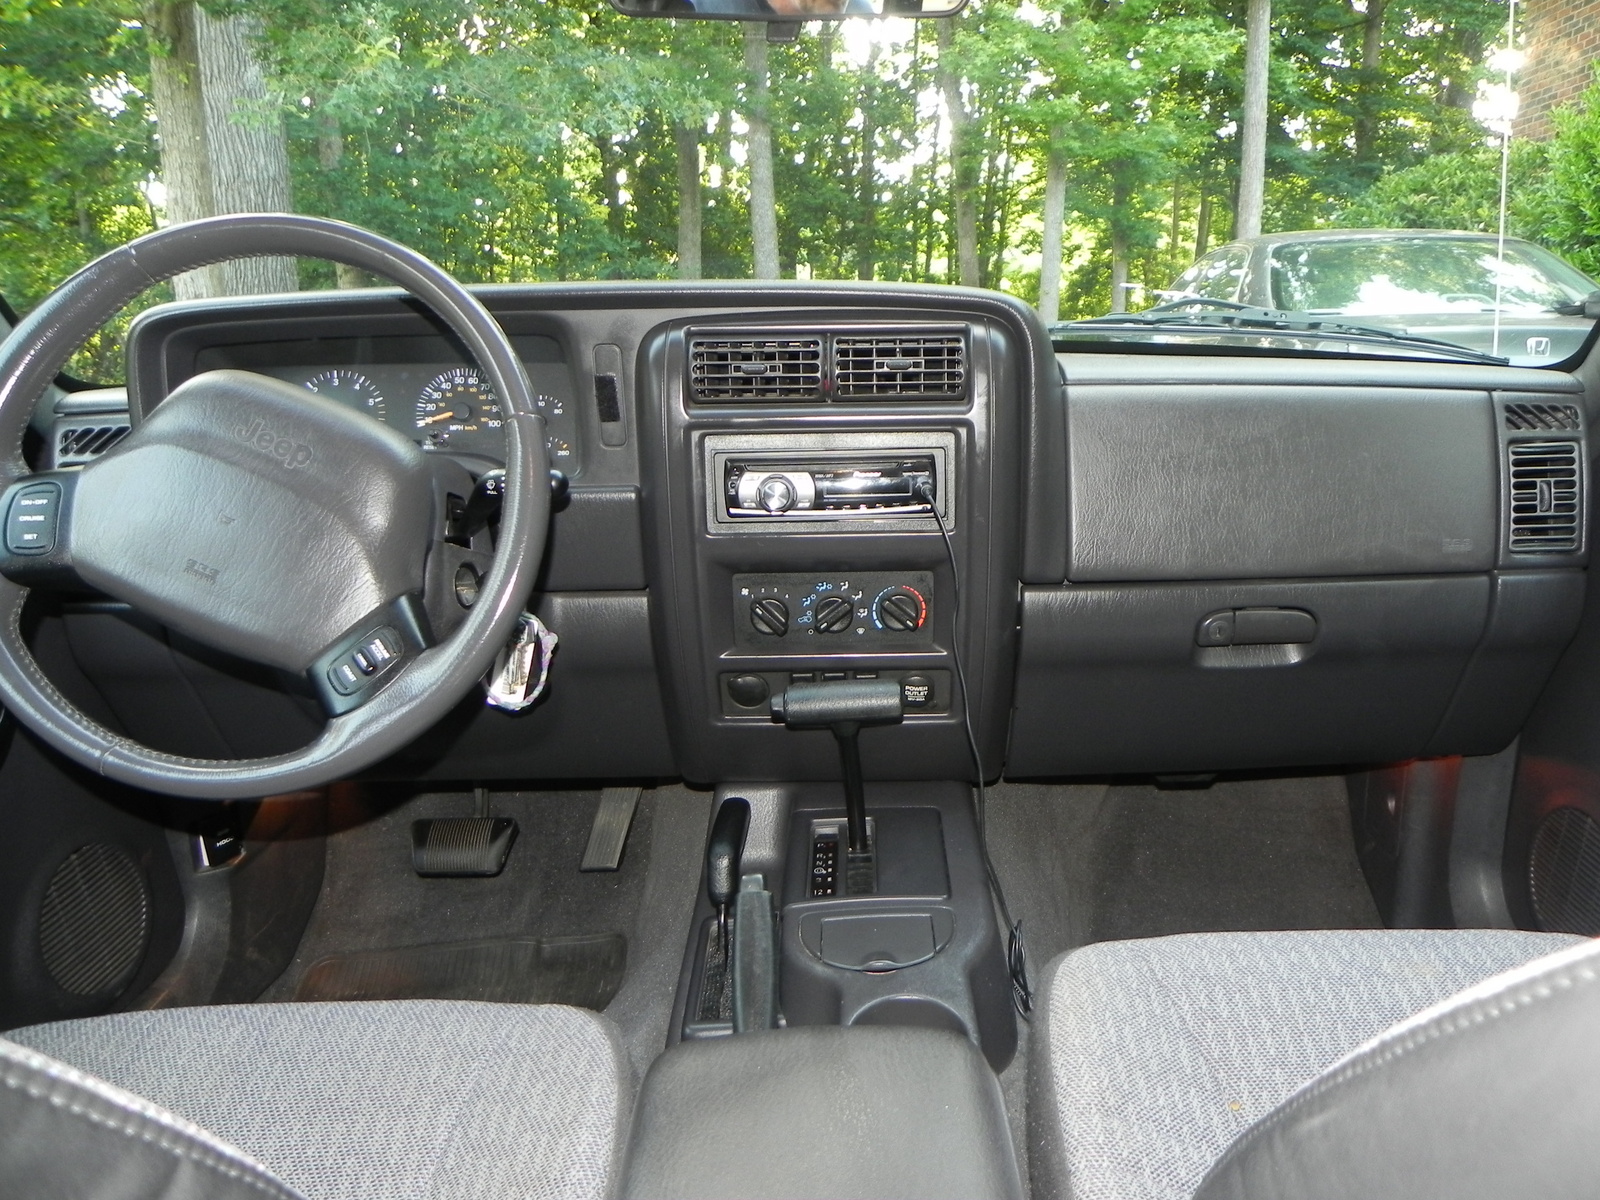 2000 Jeep cherokee sport interior #5